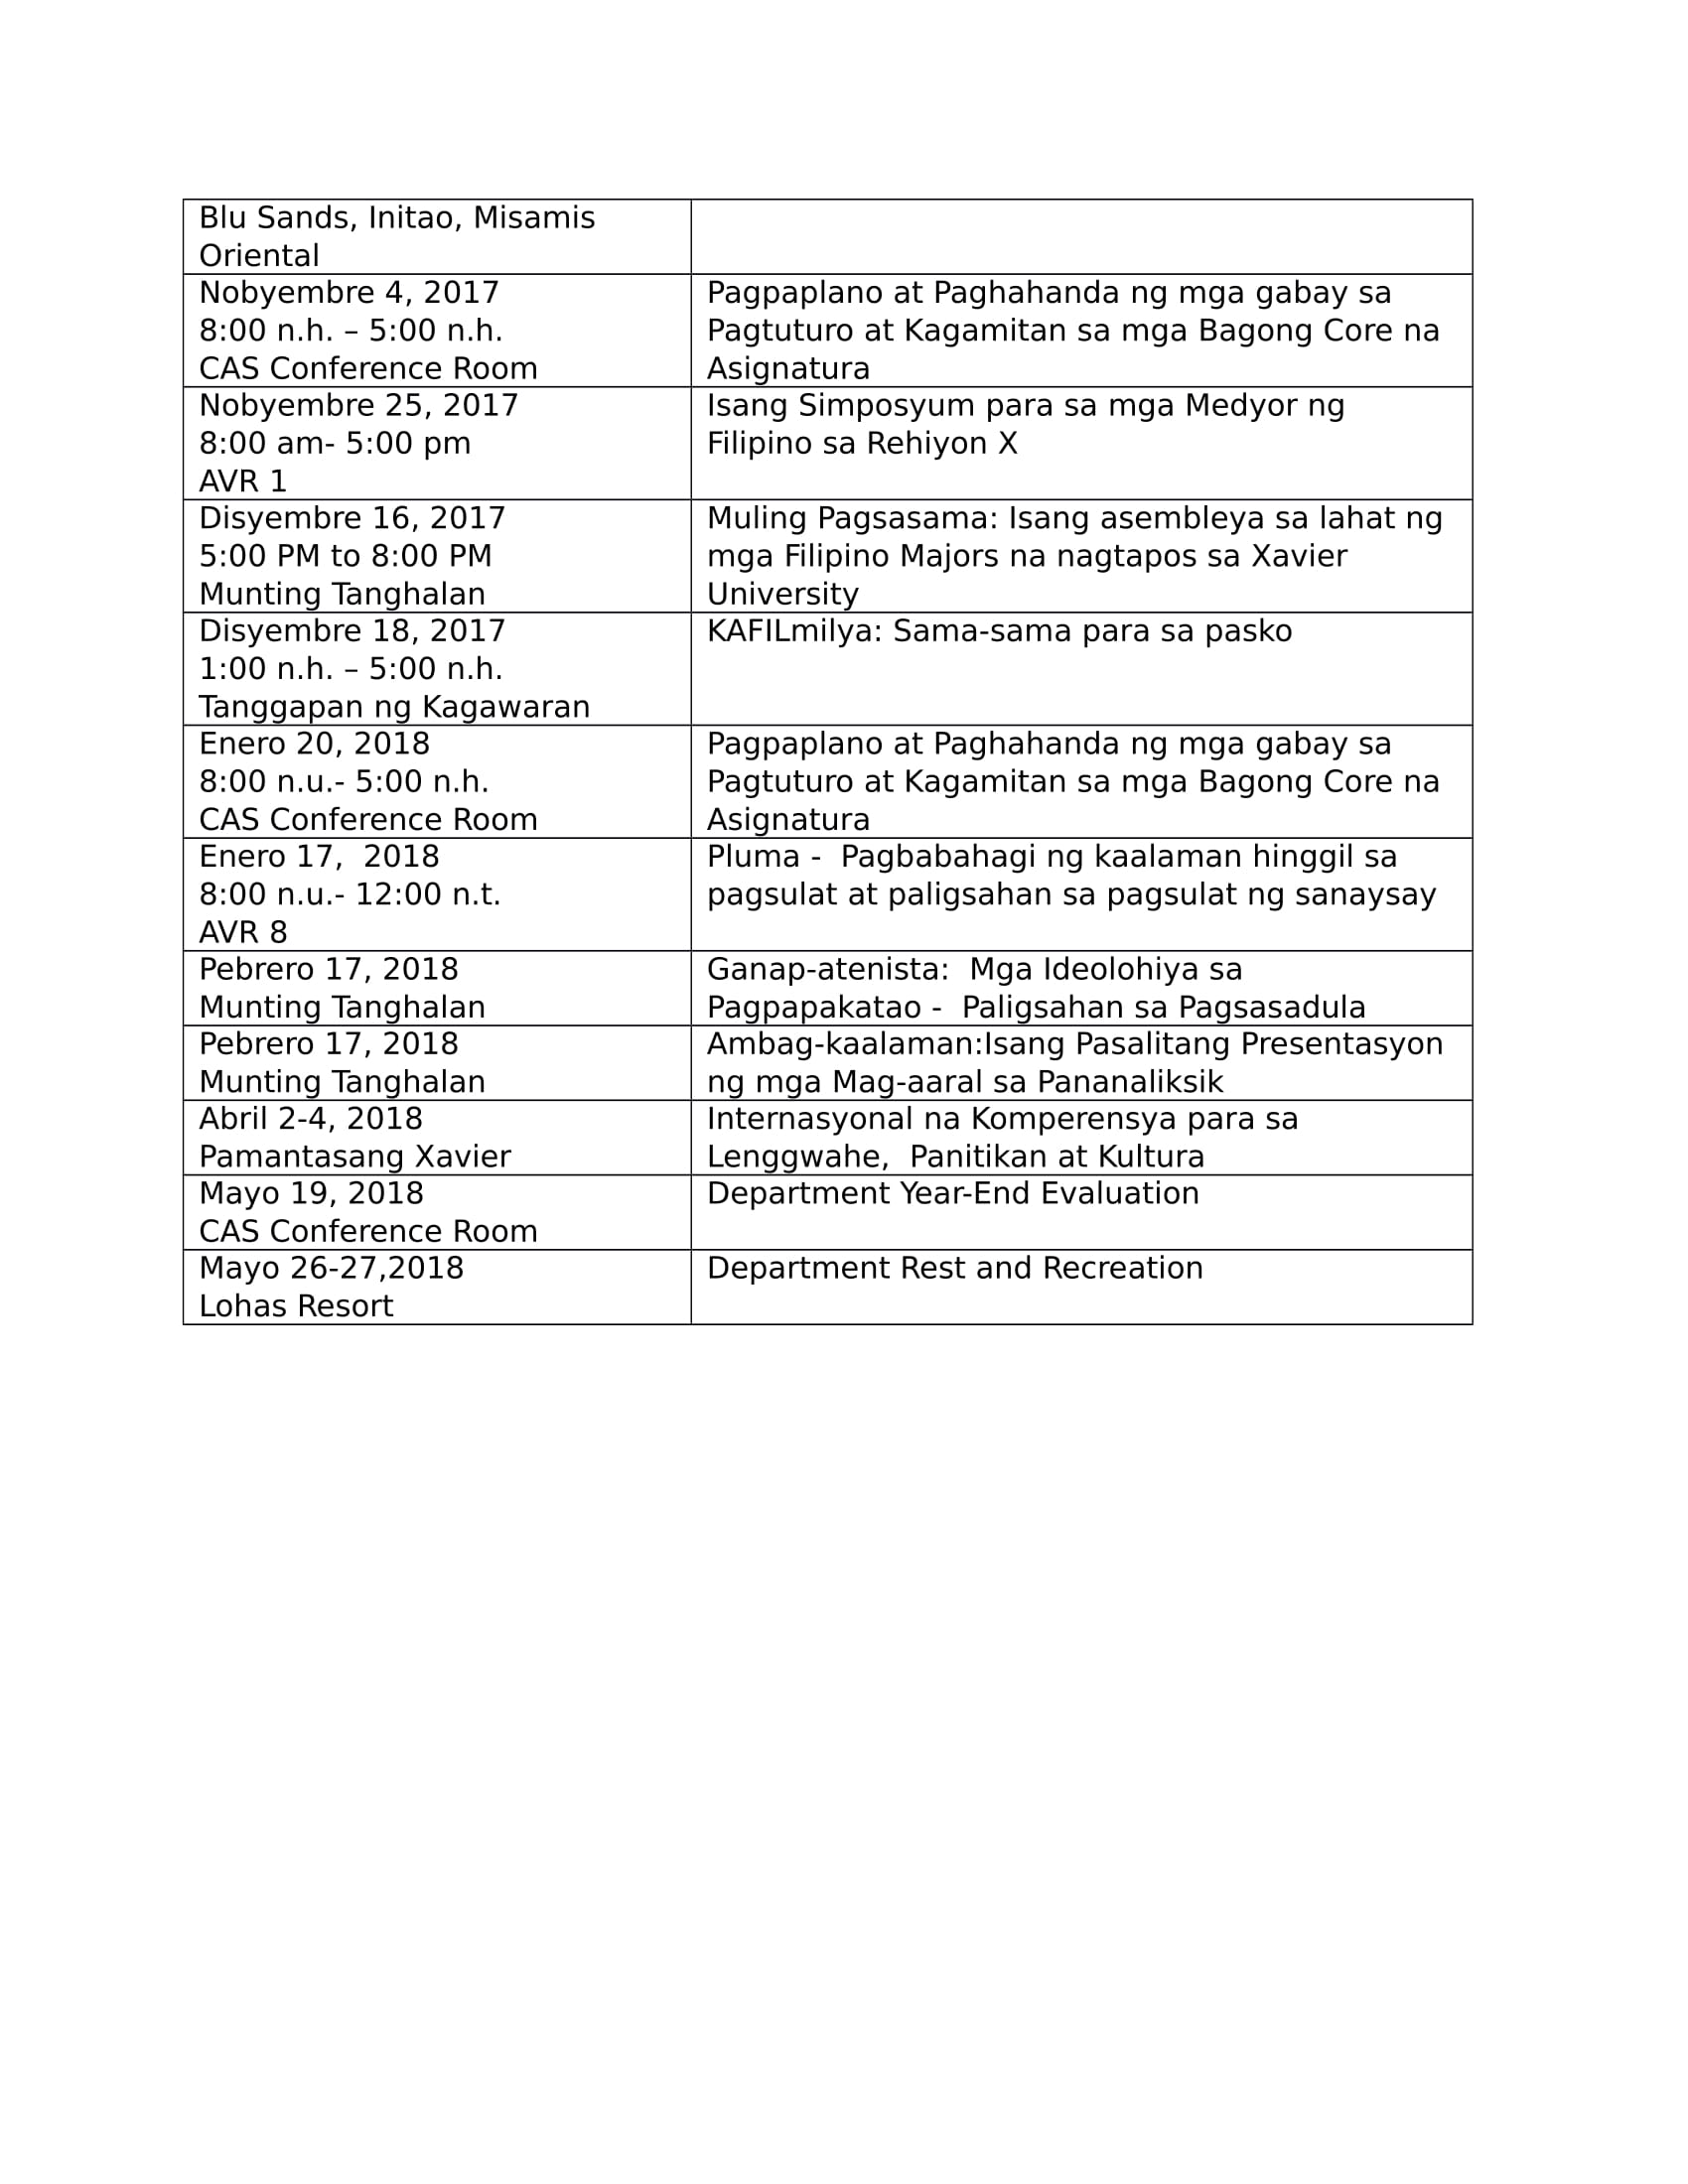 Xavier University Filipino Department Calendar of Activities